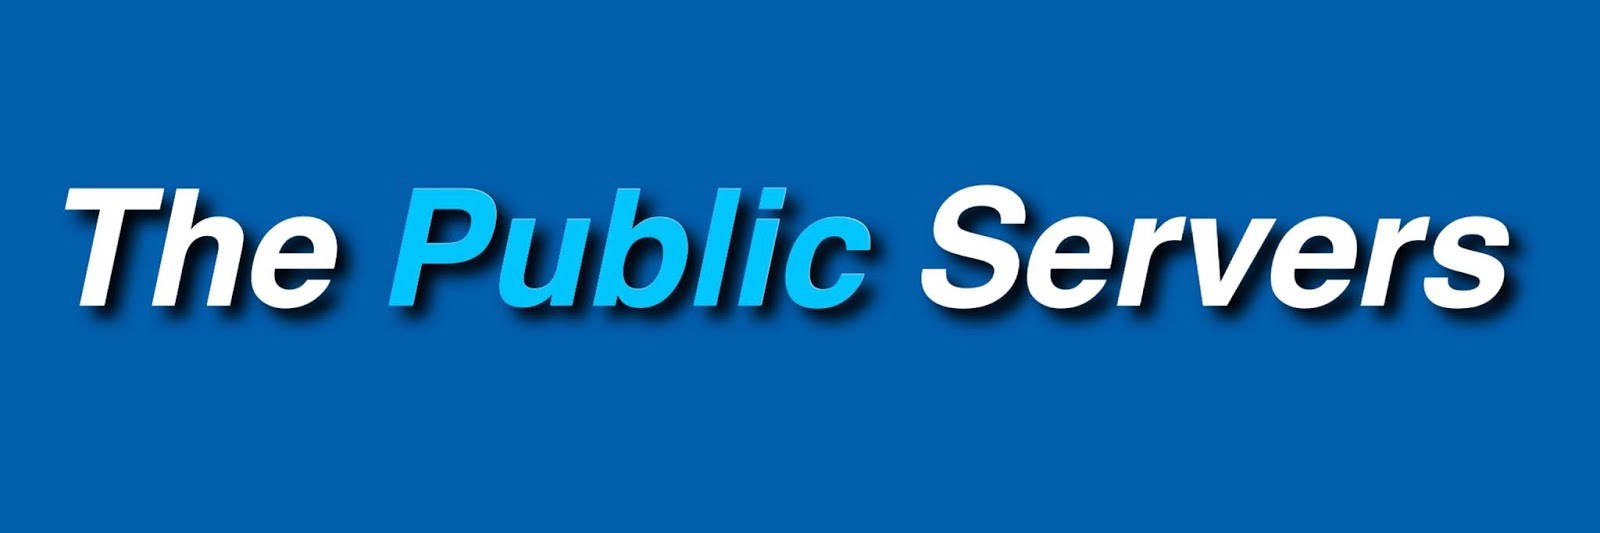 The Public Servers